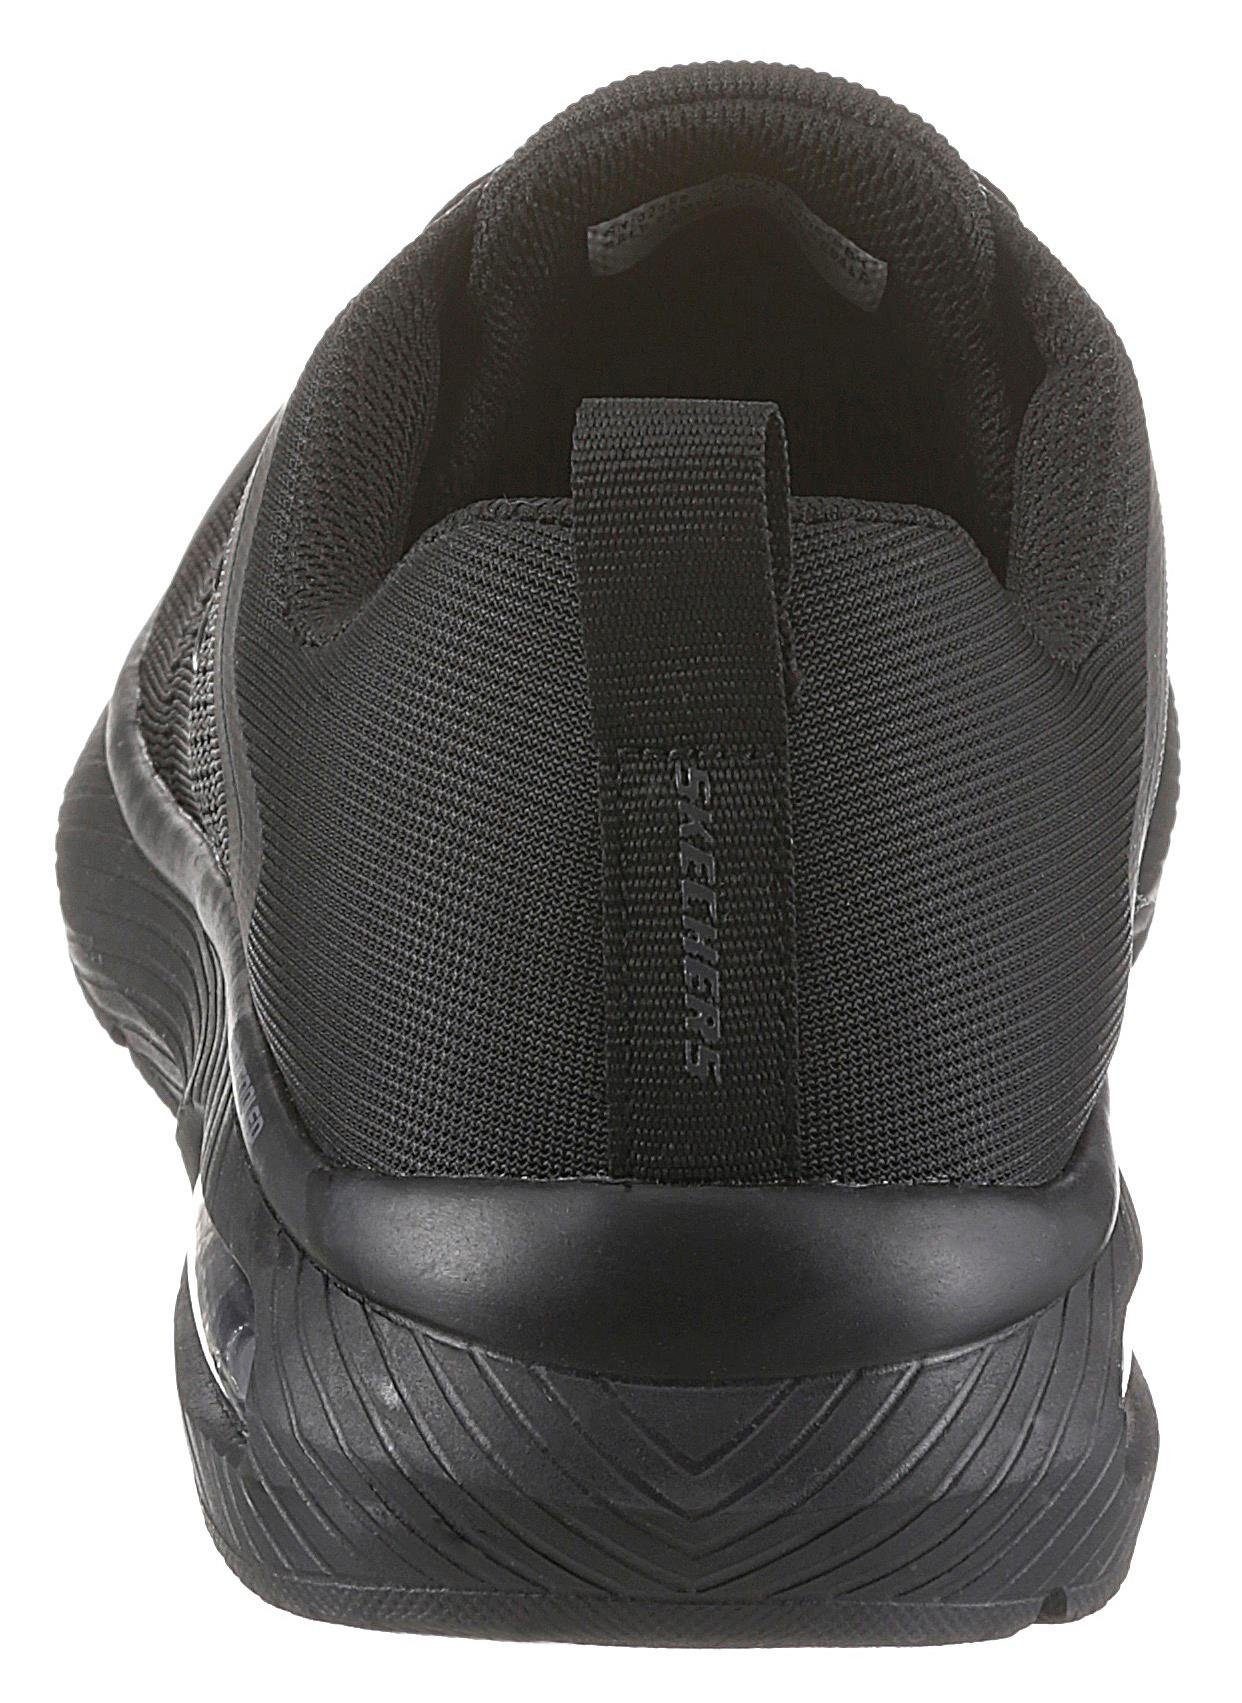 Memory schwarz Foam Air-Cooled mit Dyna Skechers Sneaker Air